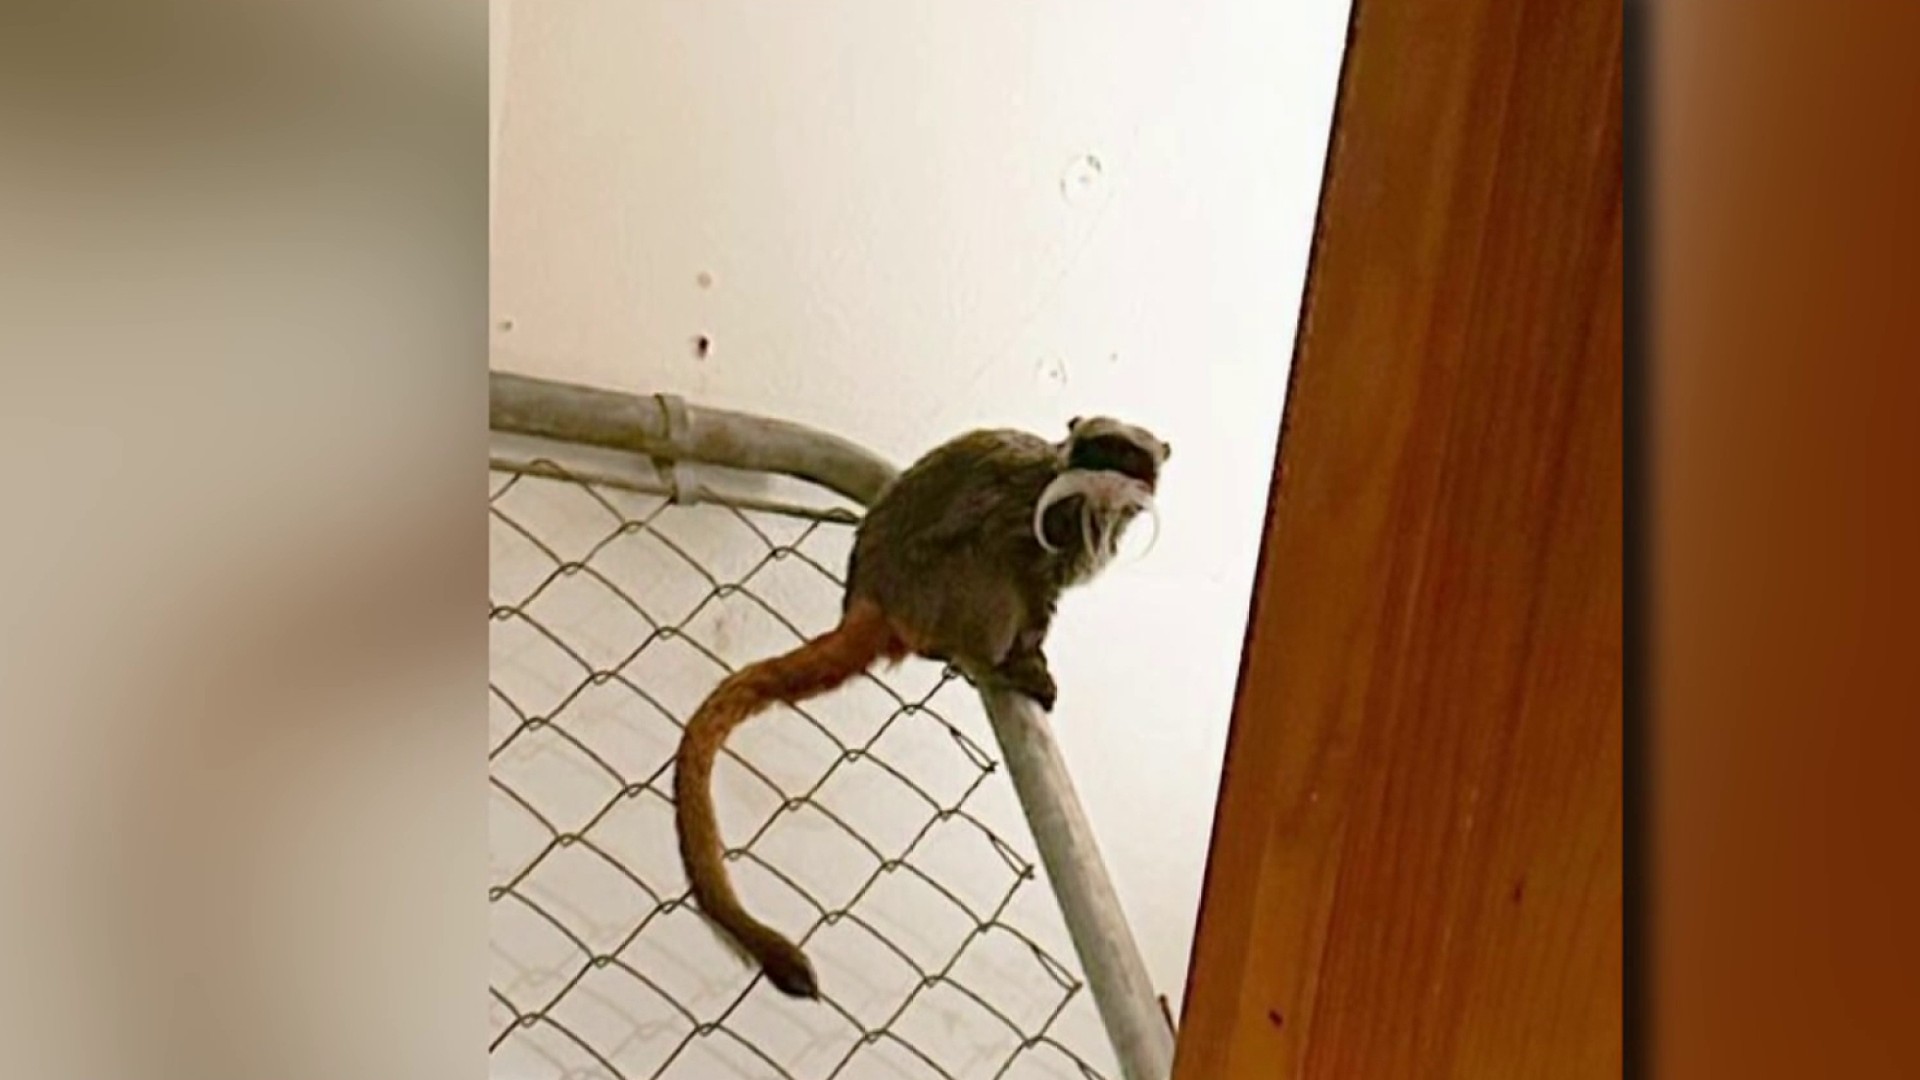 12 Monkeys Stolen From Louisiana Zoo – NBC 5 Dallas-Fort Worth